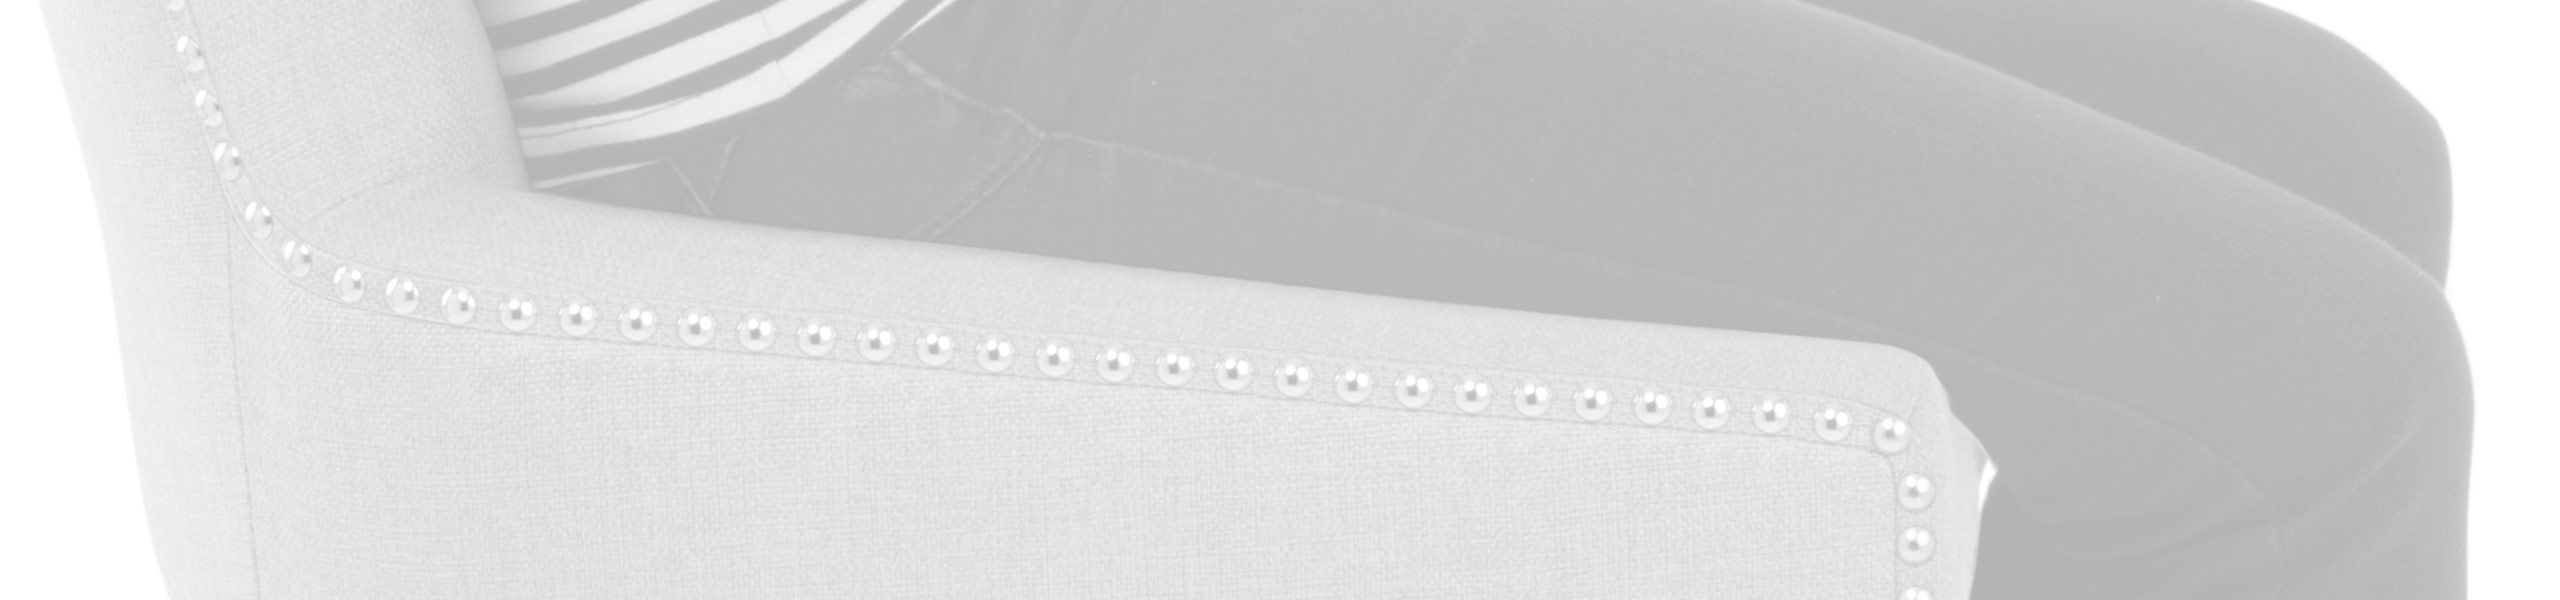 Knightsbridge Oak Stool Grey Fabric Review Banner